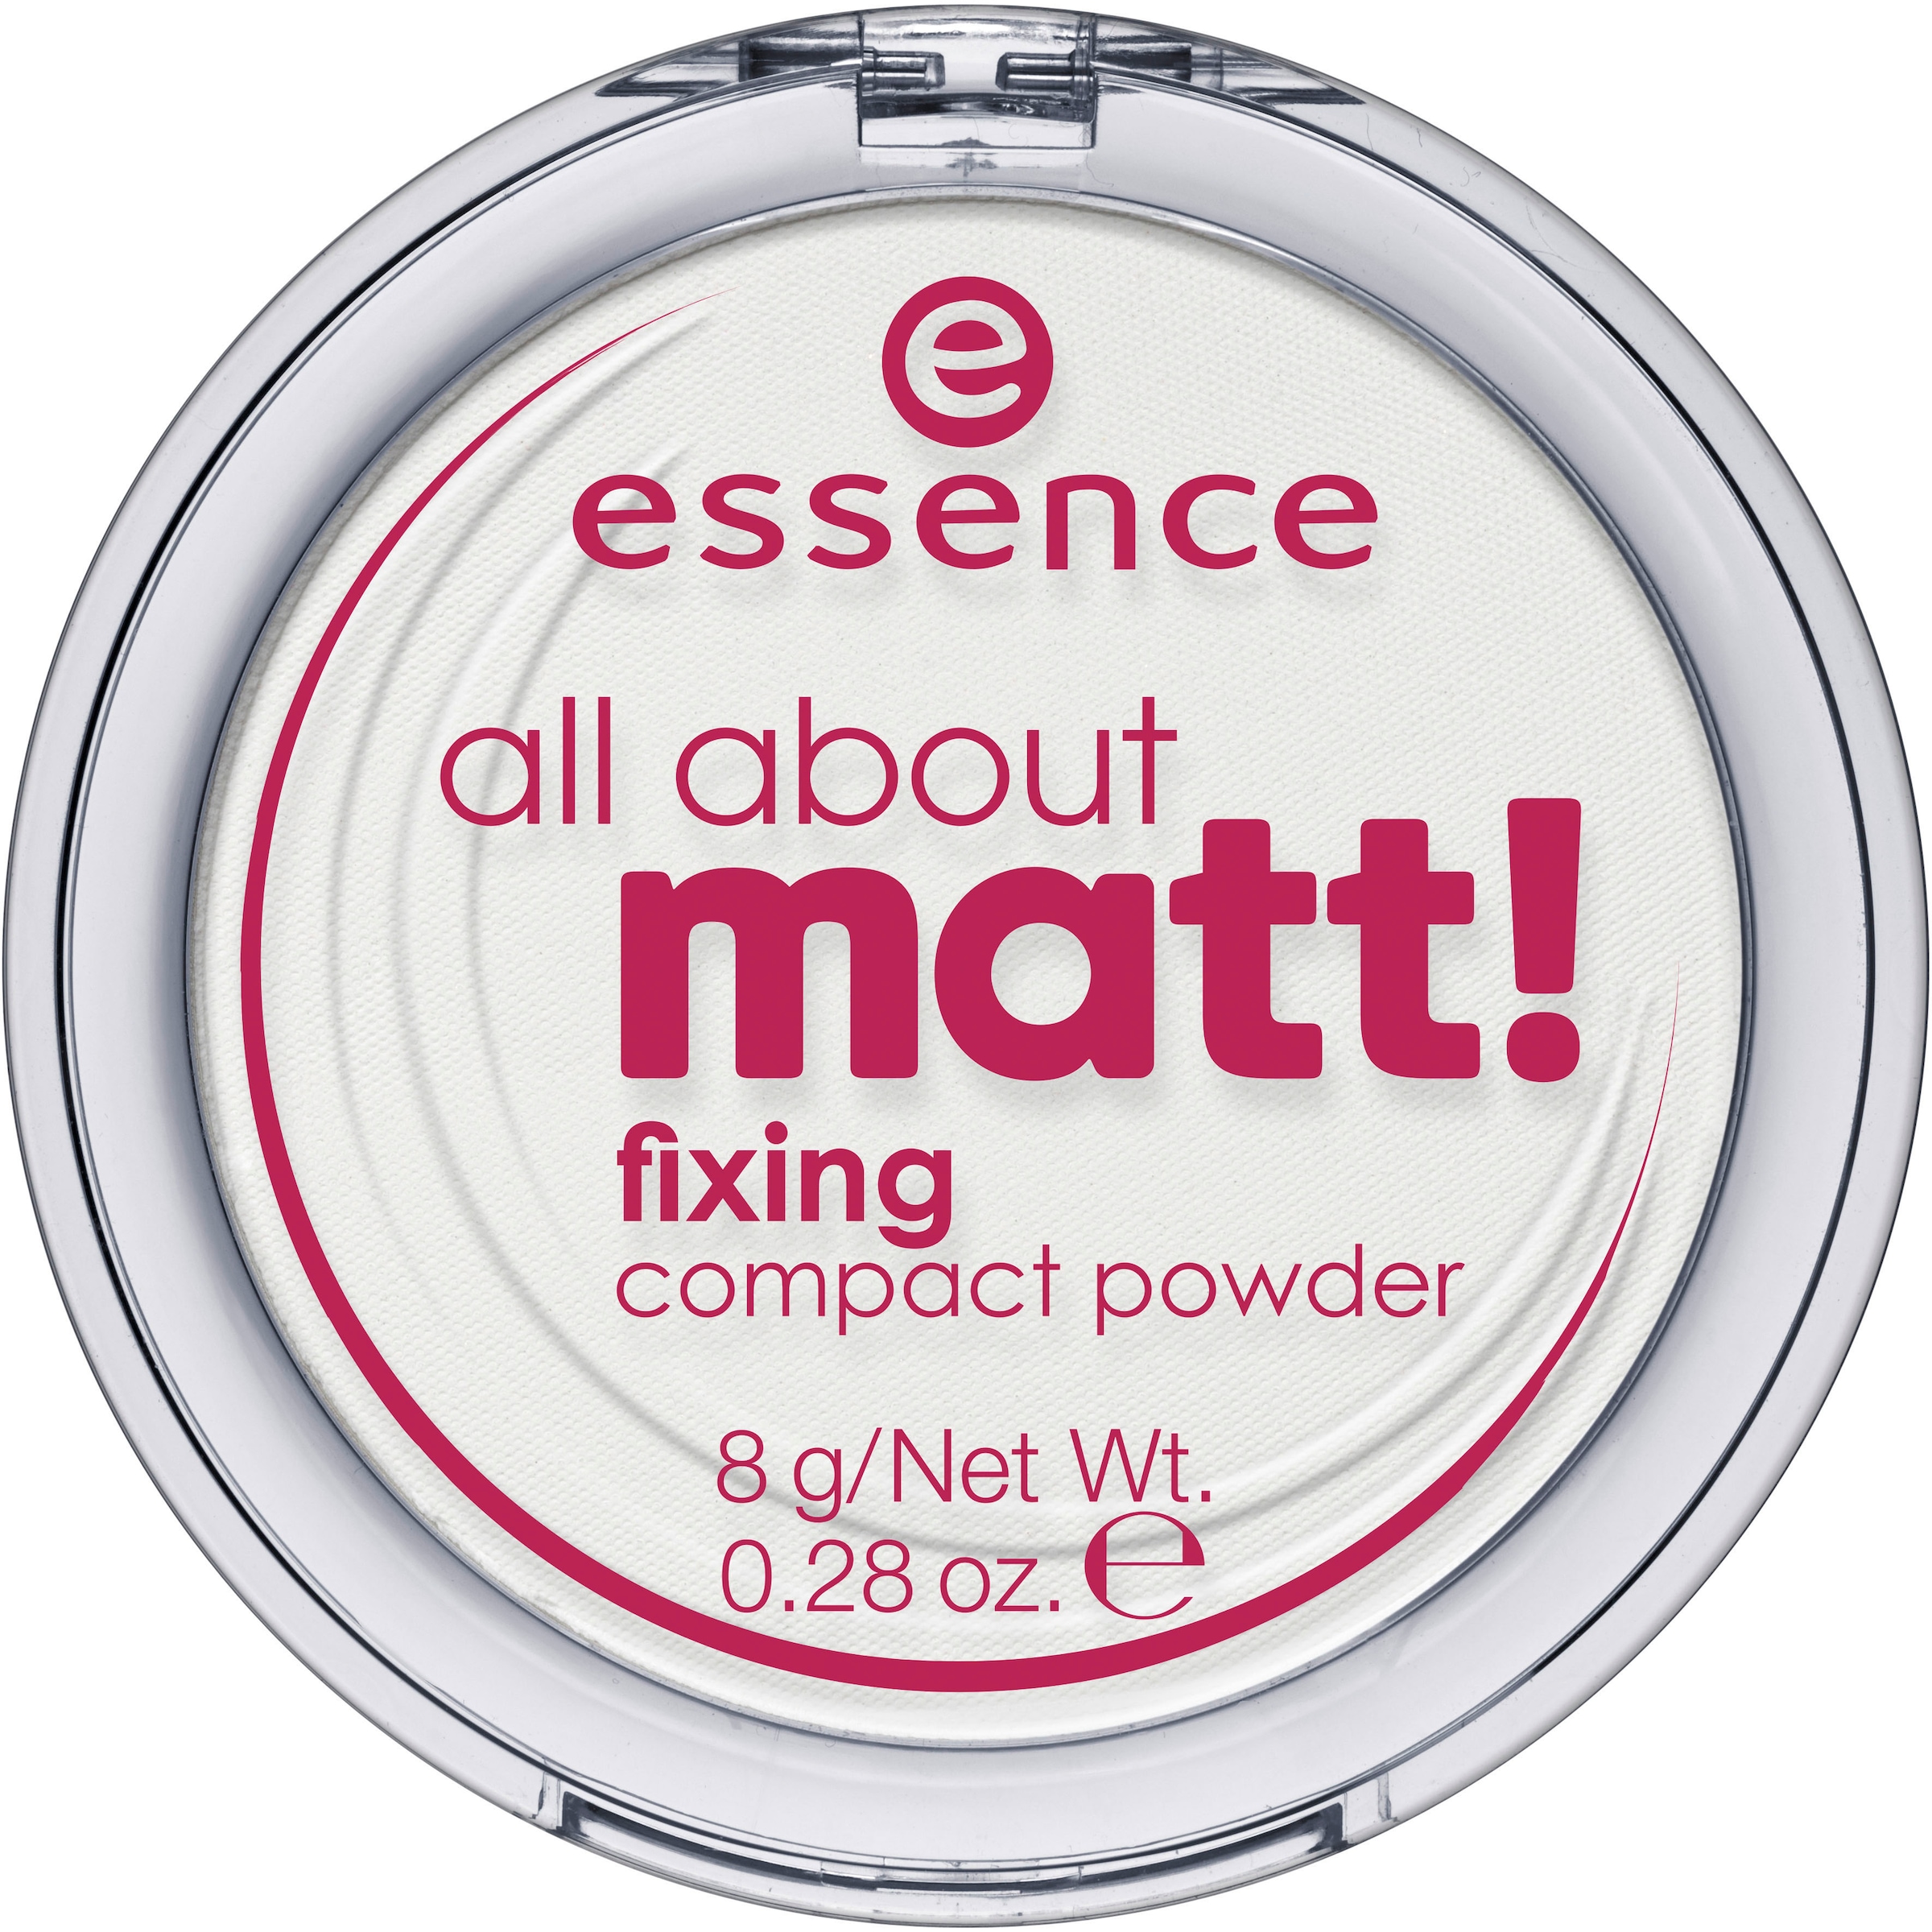 Puder about powder«, compact 3 »all tlg.) (Set, - fixing matt! Essence kaufen online OTTO